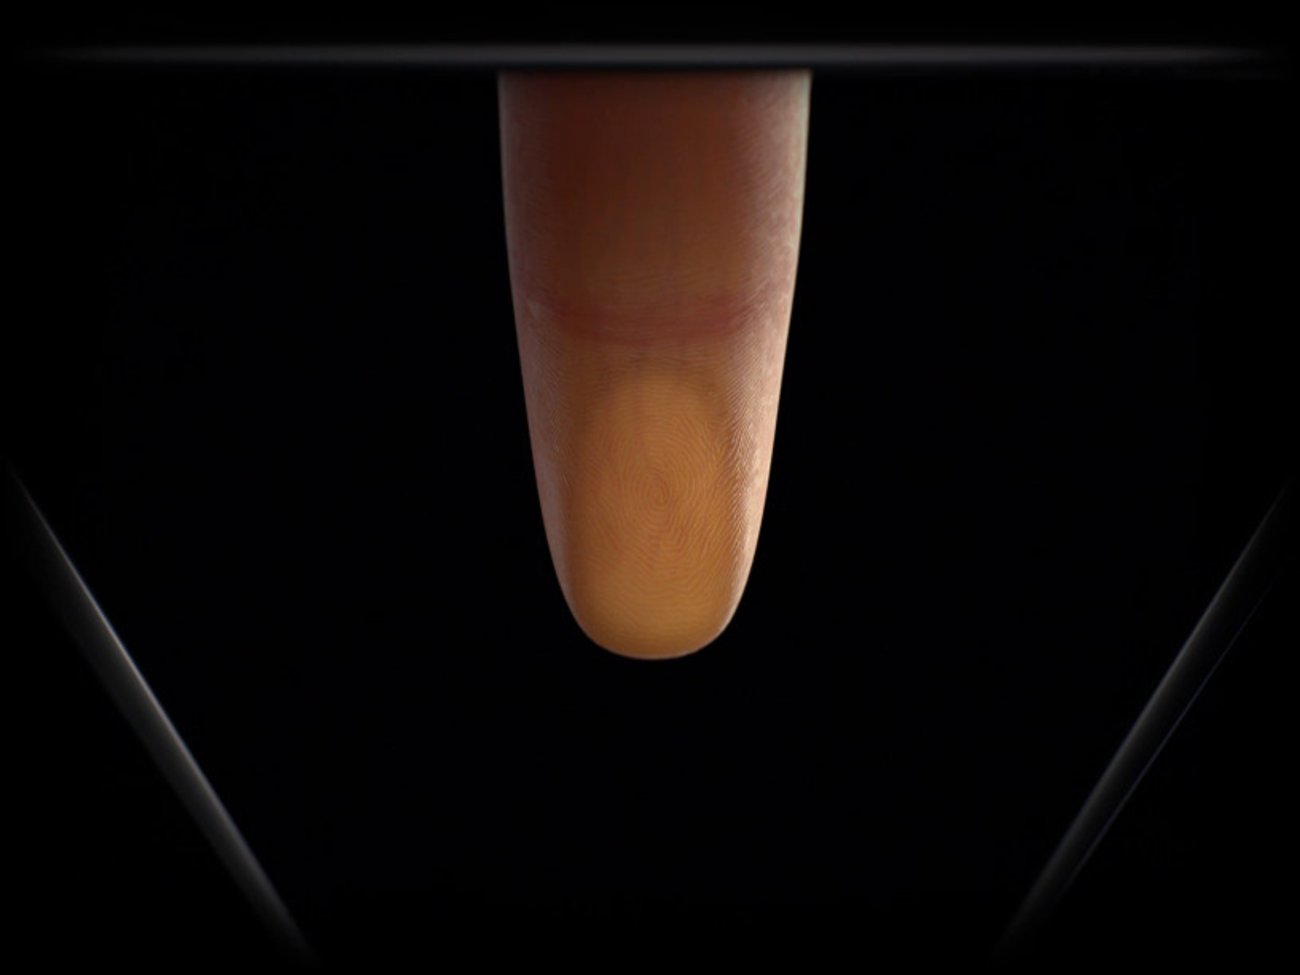 Samsung Galaxy S0/S10+: Fingerabdrucksensor im Display | Samsung.de